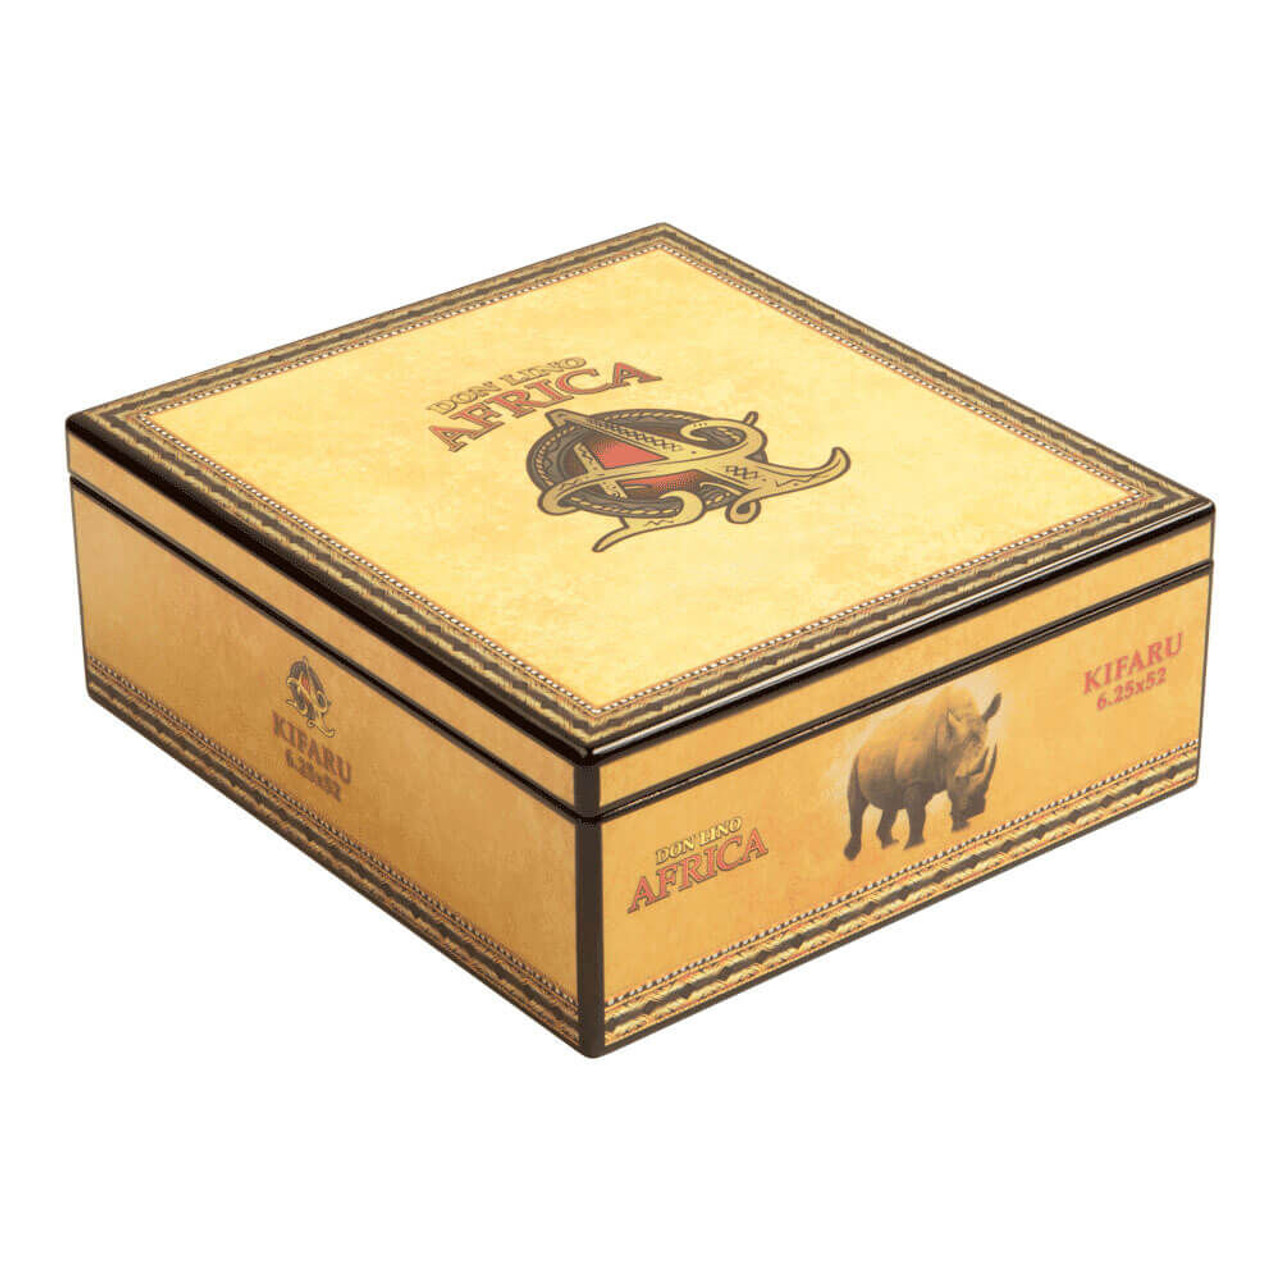 Don Lino Africa Belicoso Kifaru Cigars - 6.25 x 52 (Box of 20) *Box